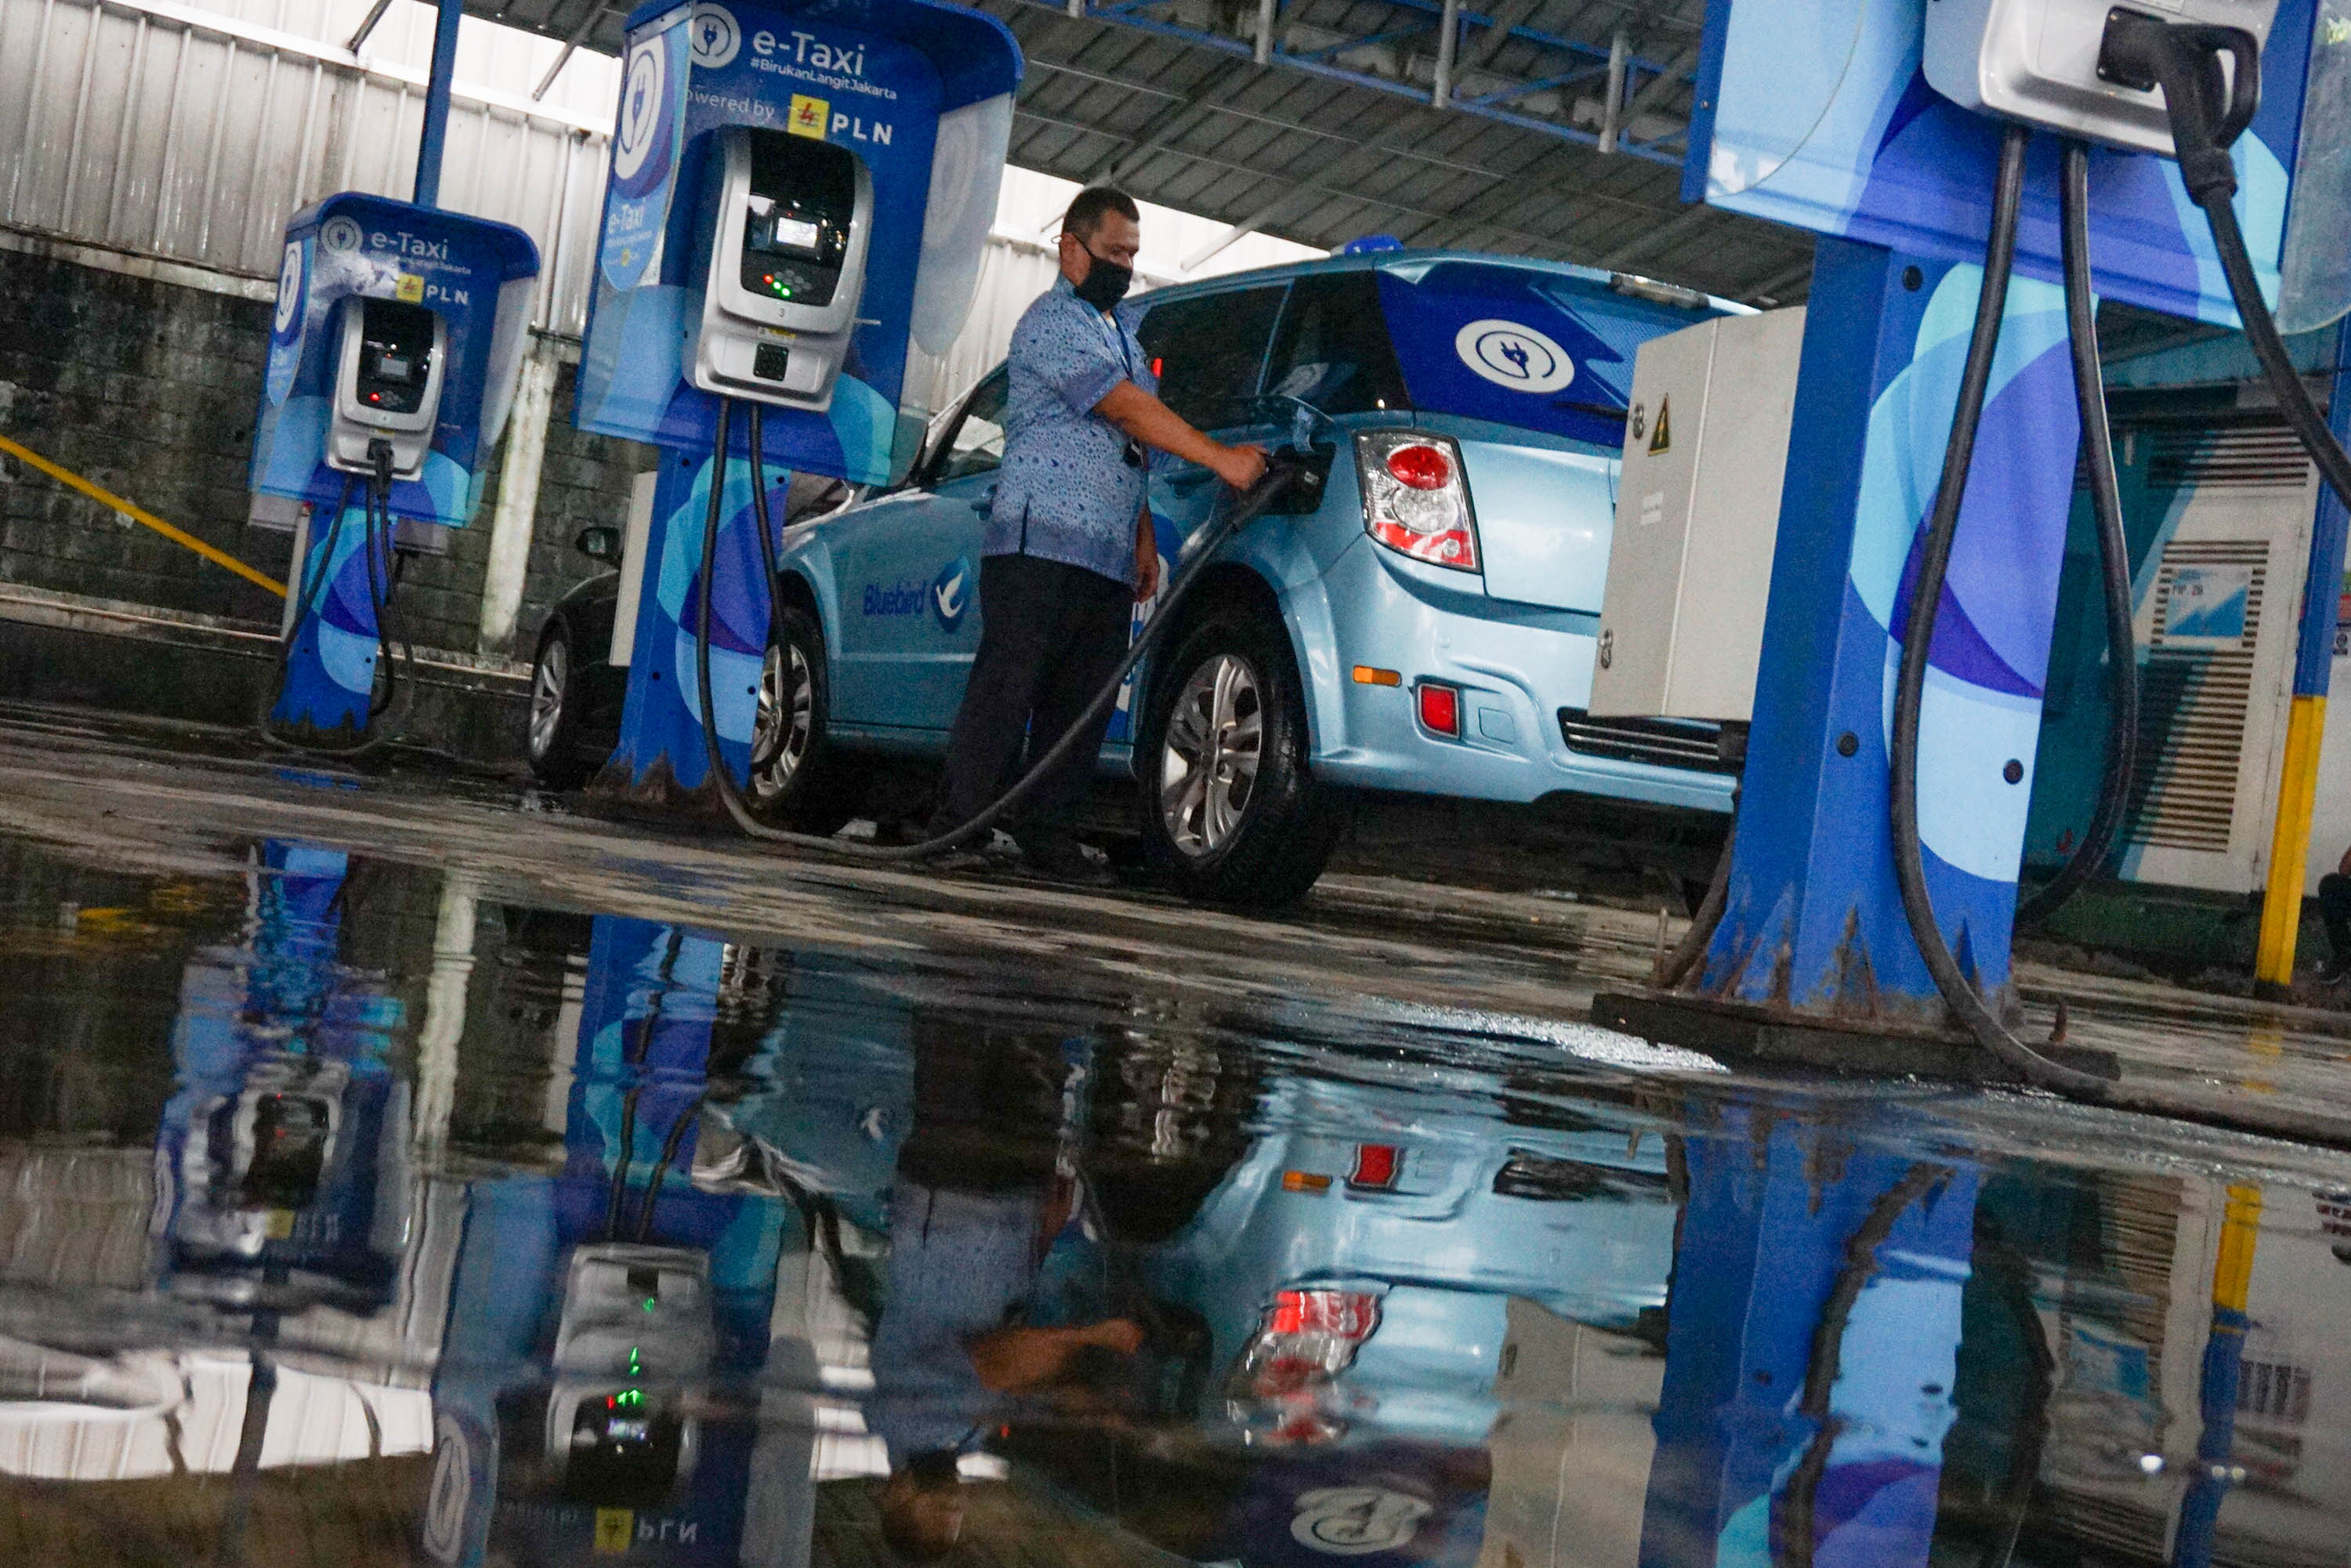 Pengemudi mengisi daya armada taksi listrik Bluebird (e-Taxi) di stasiun pengisian kendaraan listrik  Kantor Pusat Bluebird Group, Mampang Prapatan,  Jakarta, Rabu, 13 Juli 2022. Foto: Ismail Pohan/TrenAsia